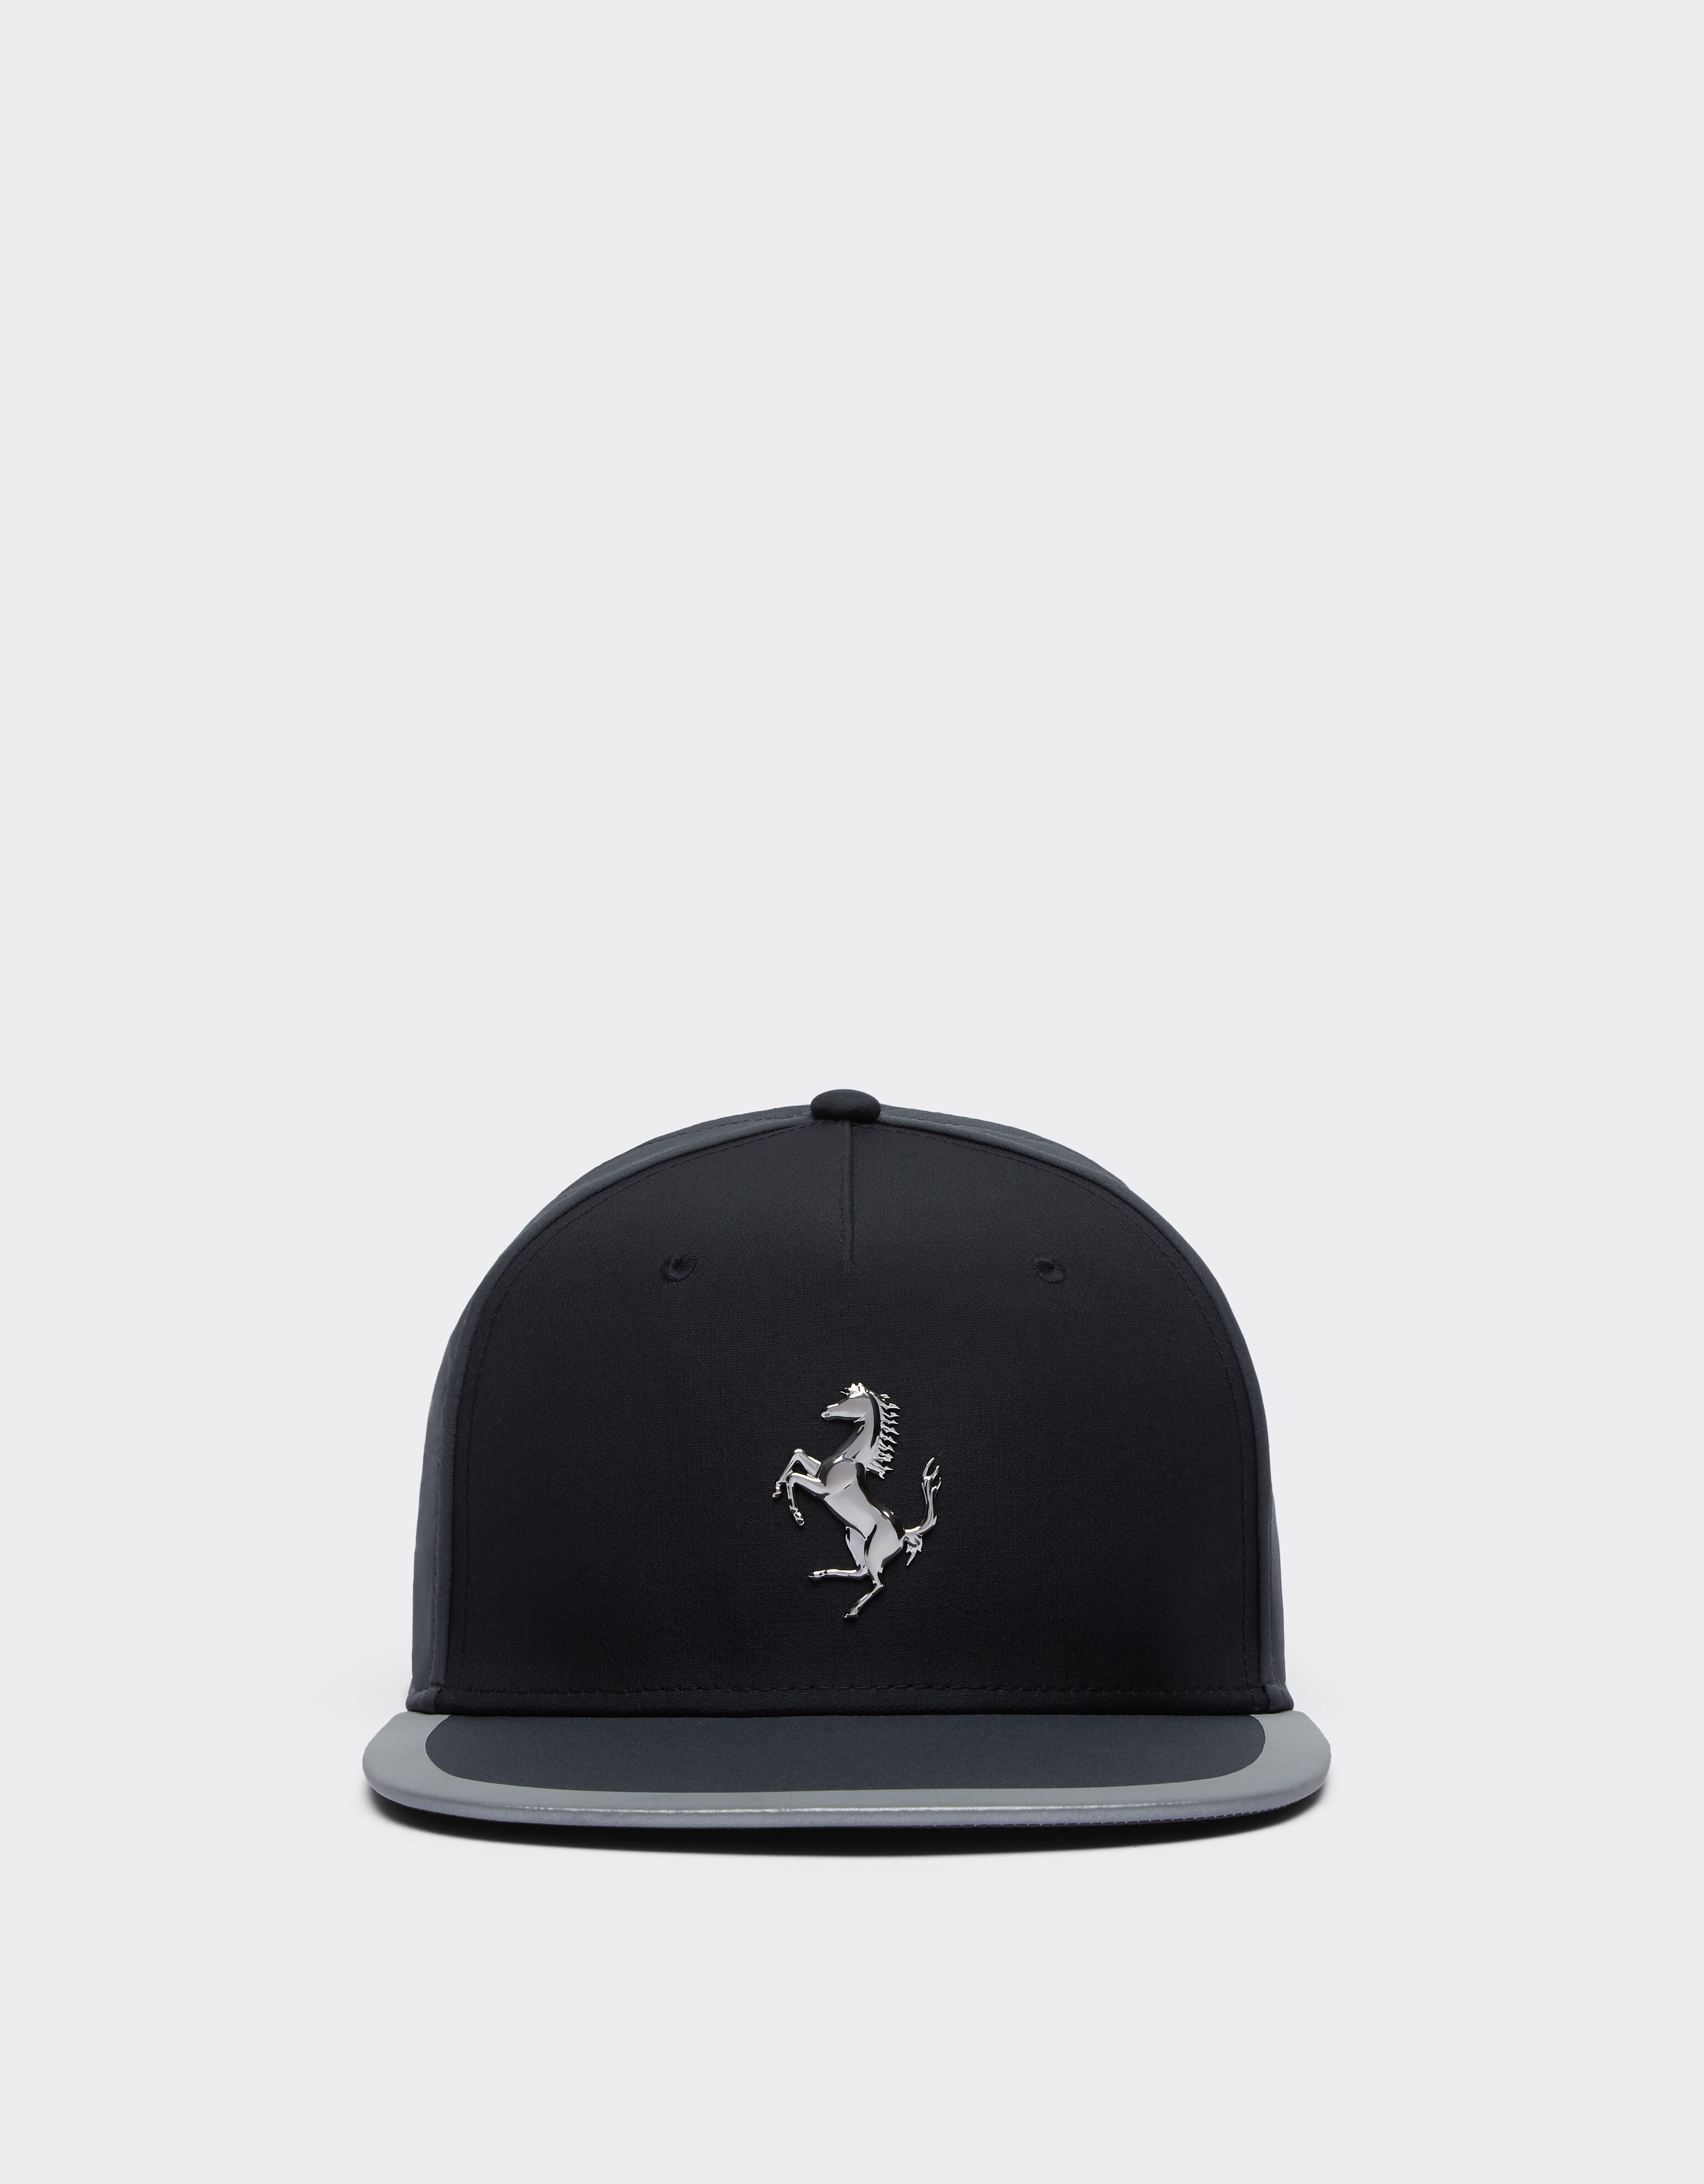 Ferrari Baseball cap with Prancing Horse detail Optical White 20815f